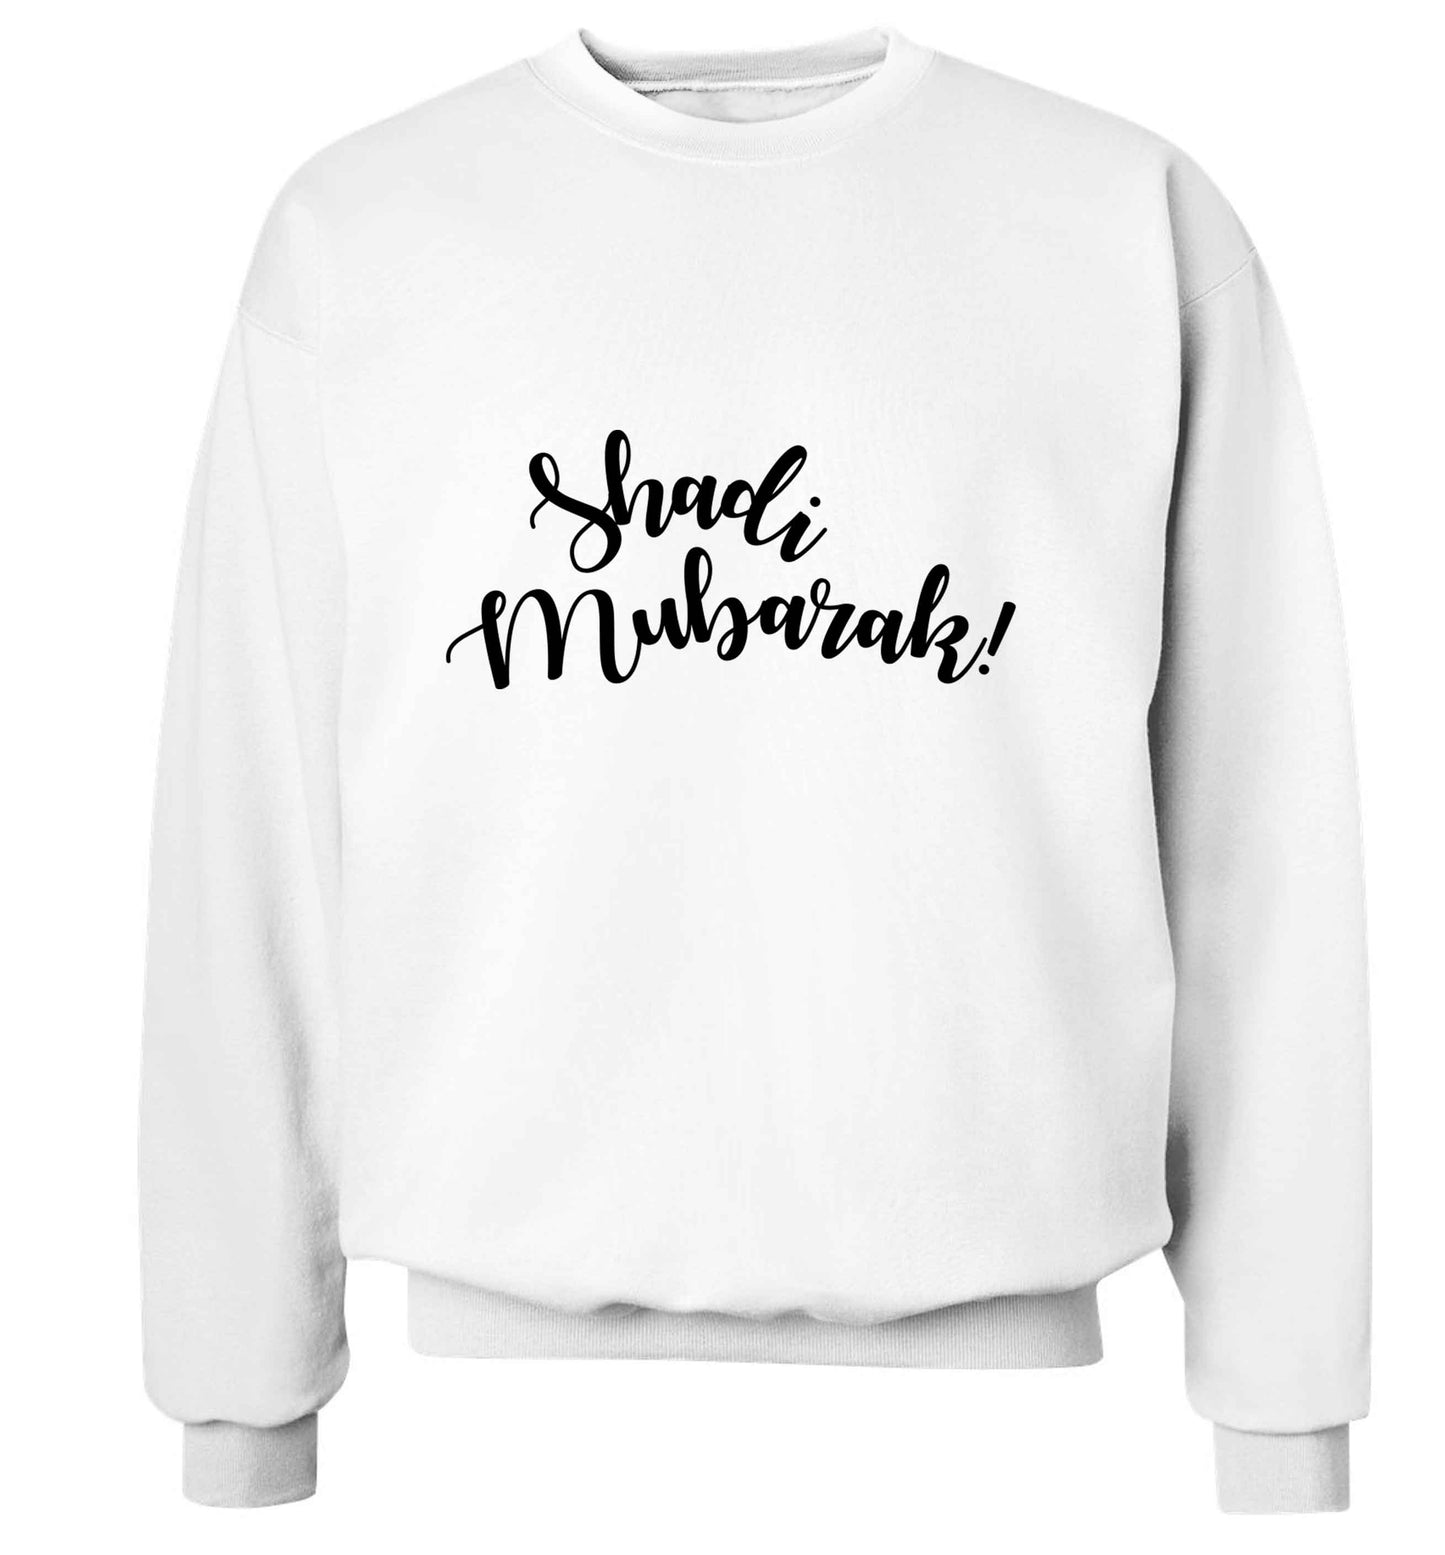 Shadi mubarak adult's unisex white sweater 2XL